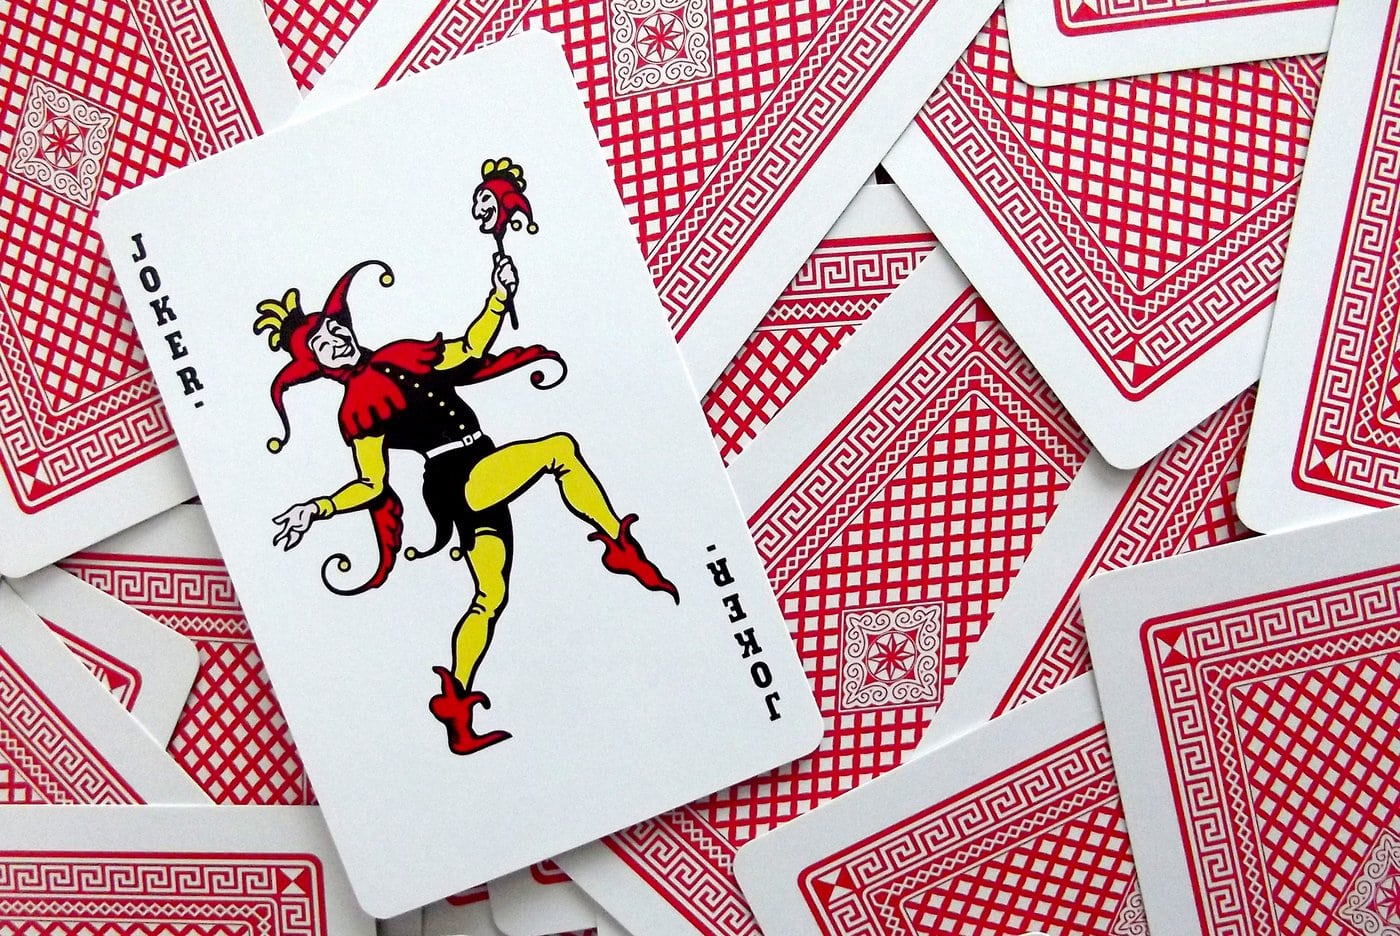 Joker playing card - April Fools Day